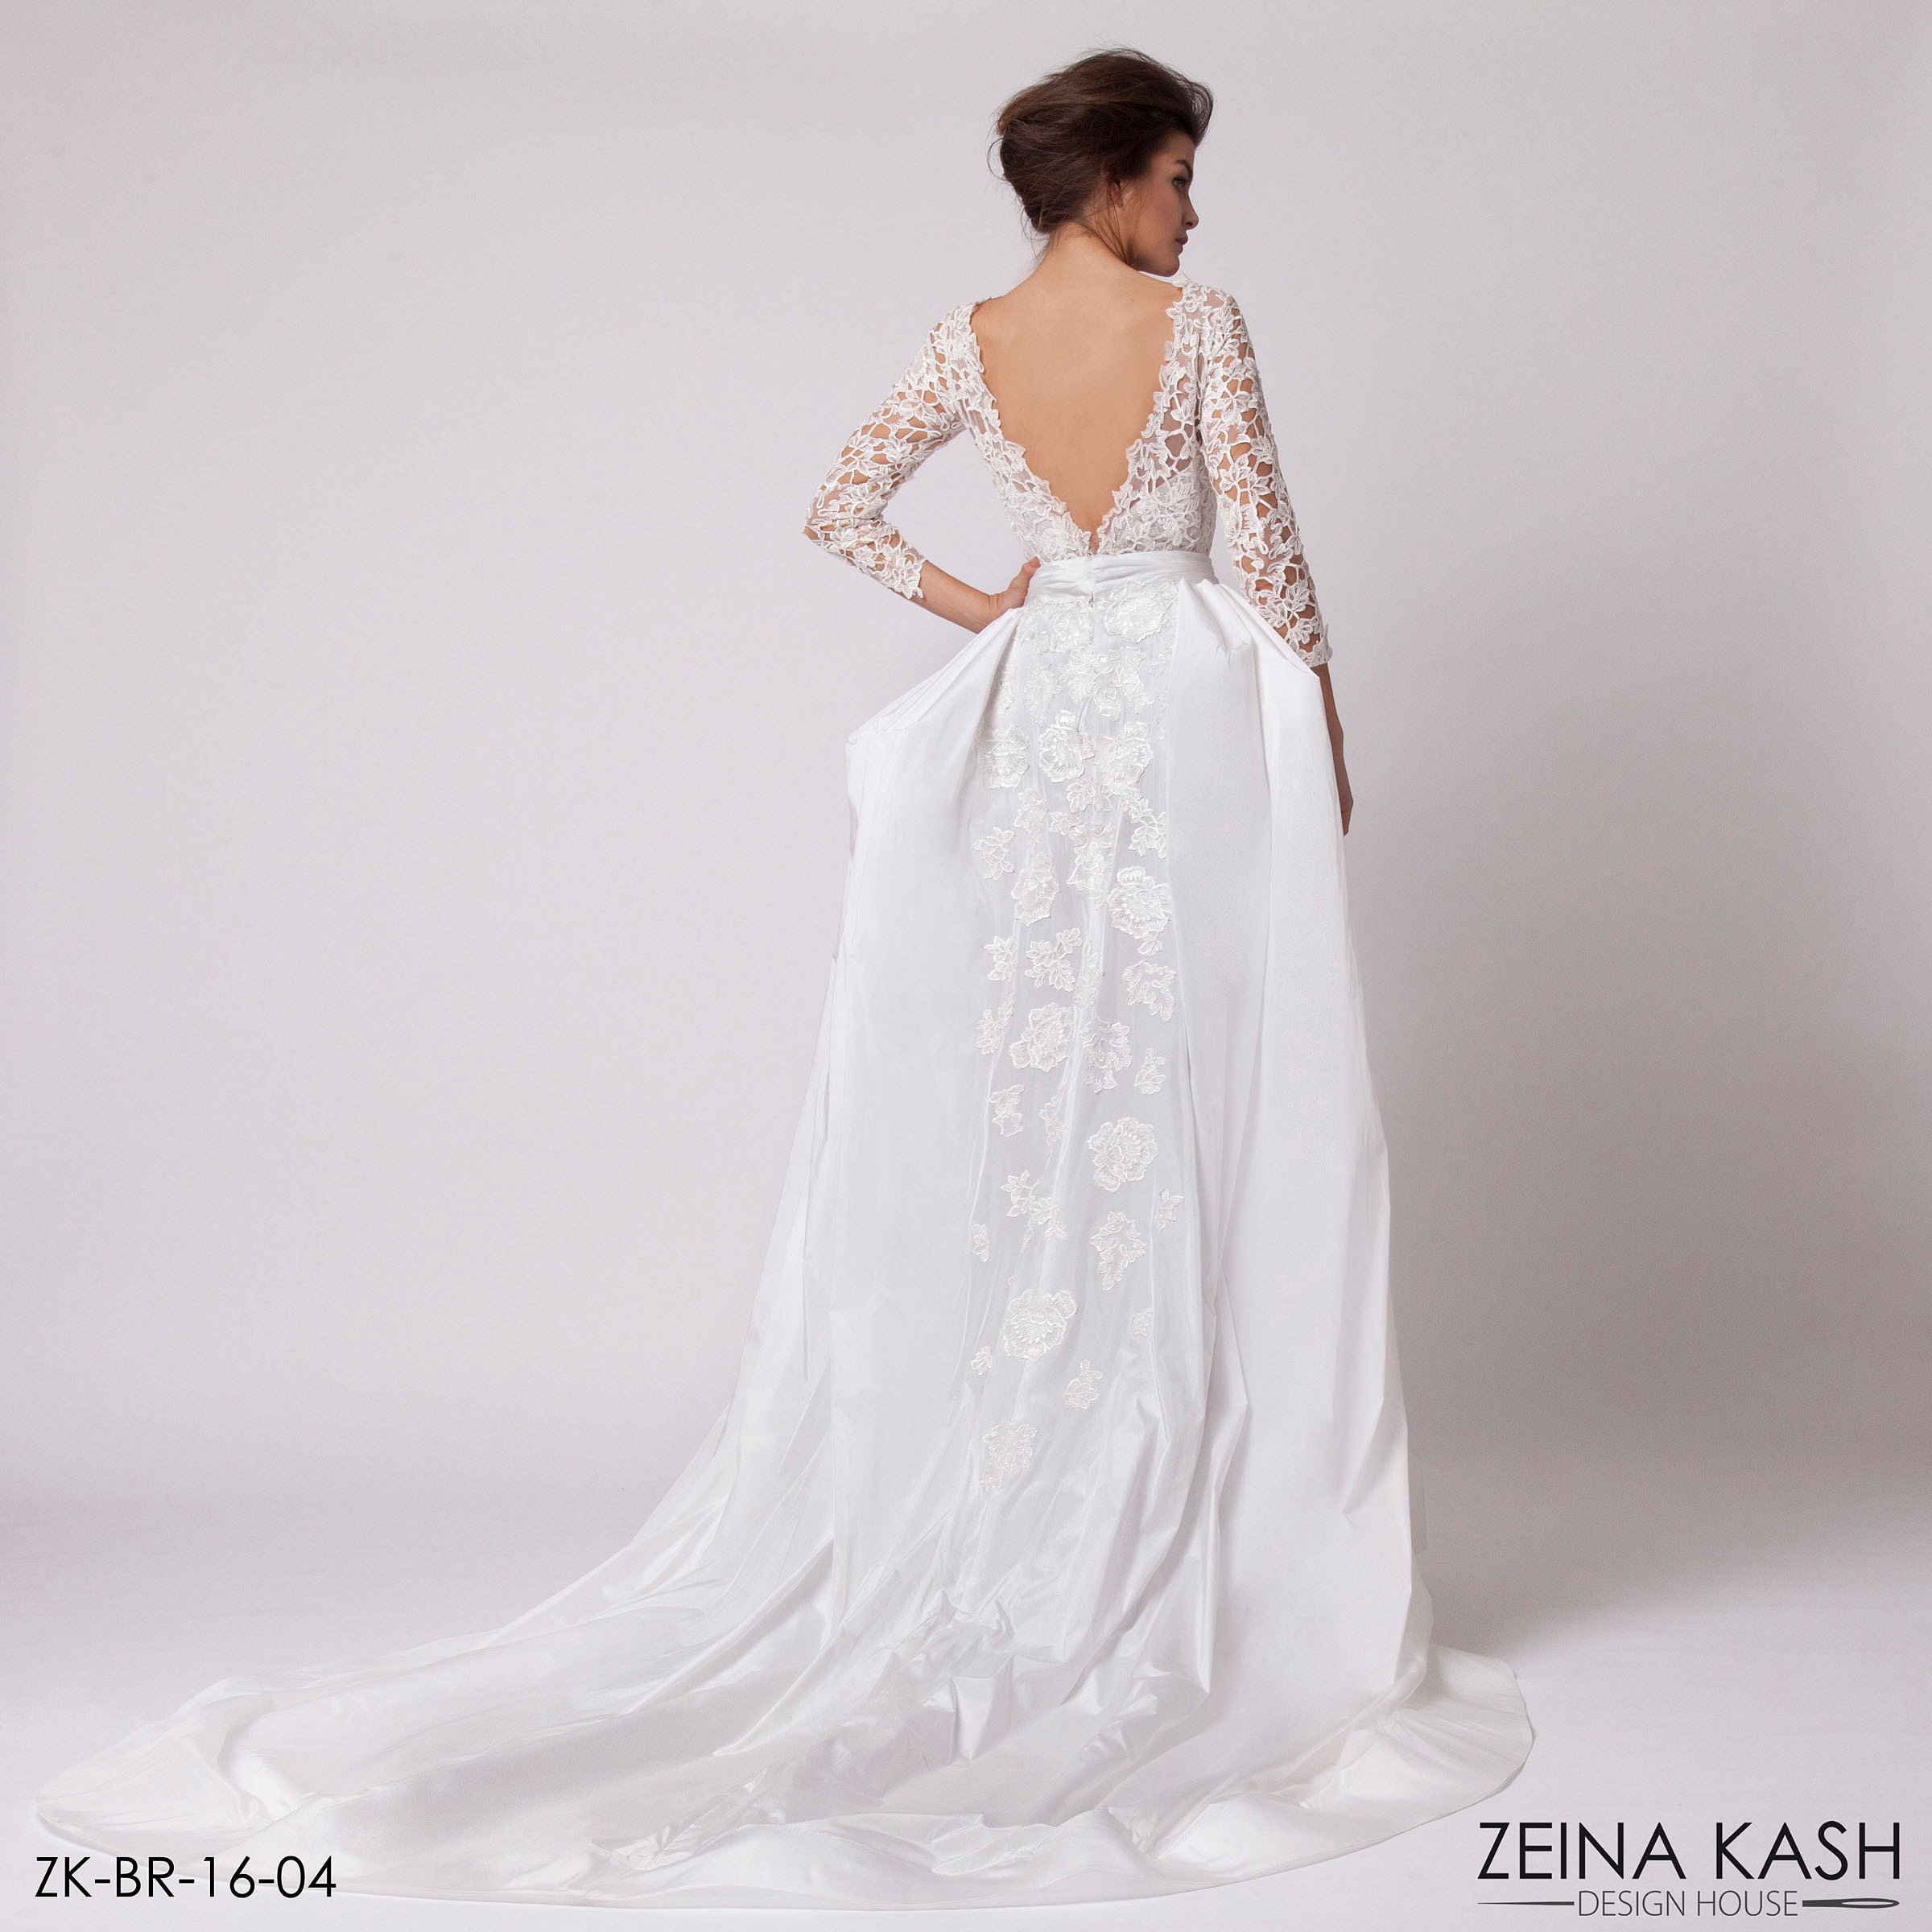 Zeina Kash 2016 collection - Bridal